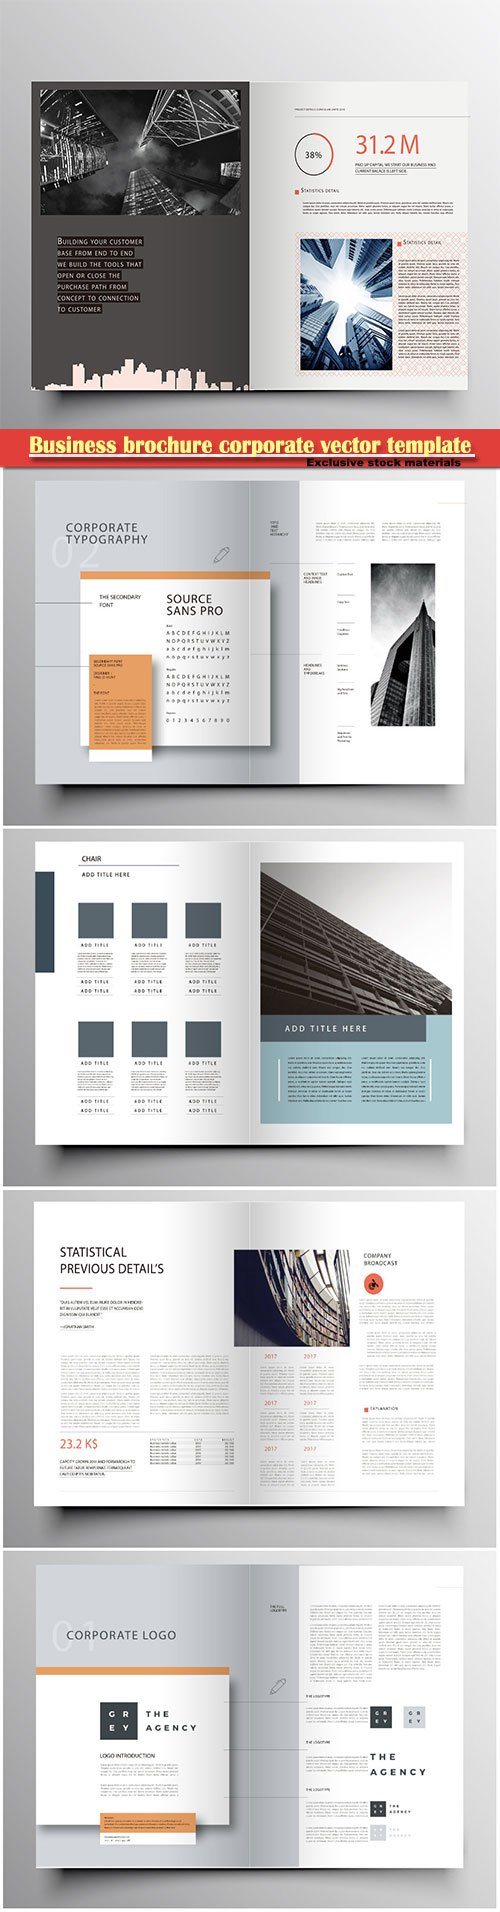 Business brochure corporate vector template